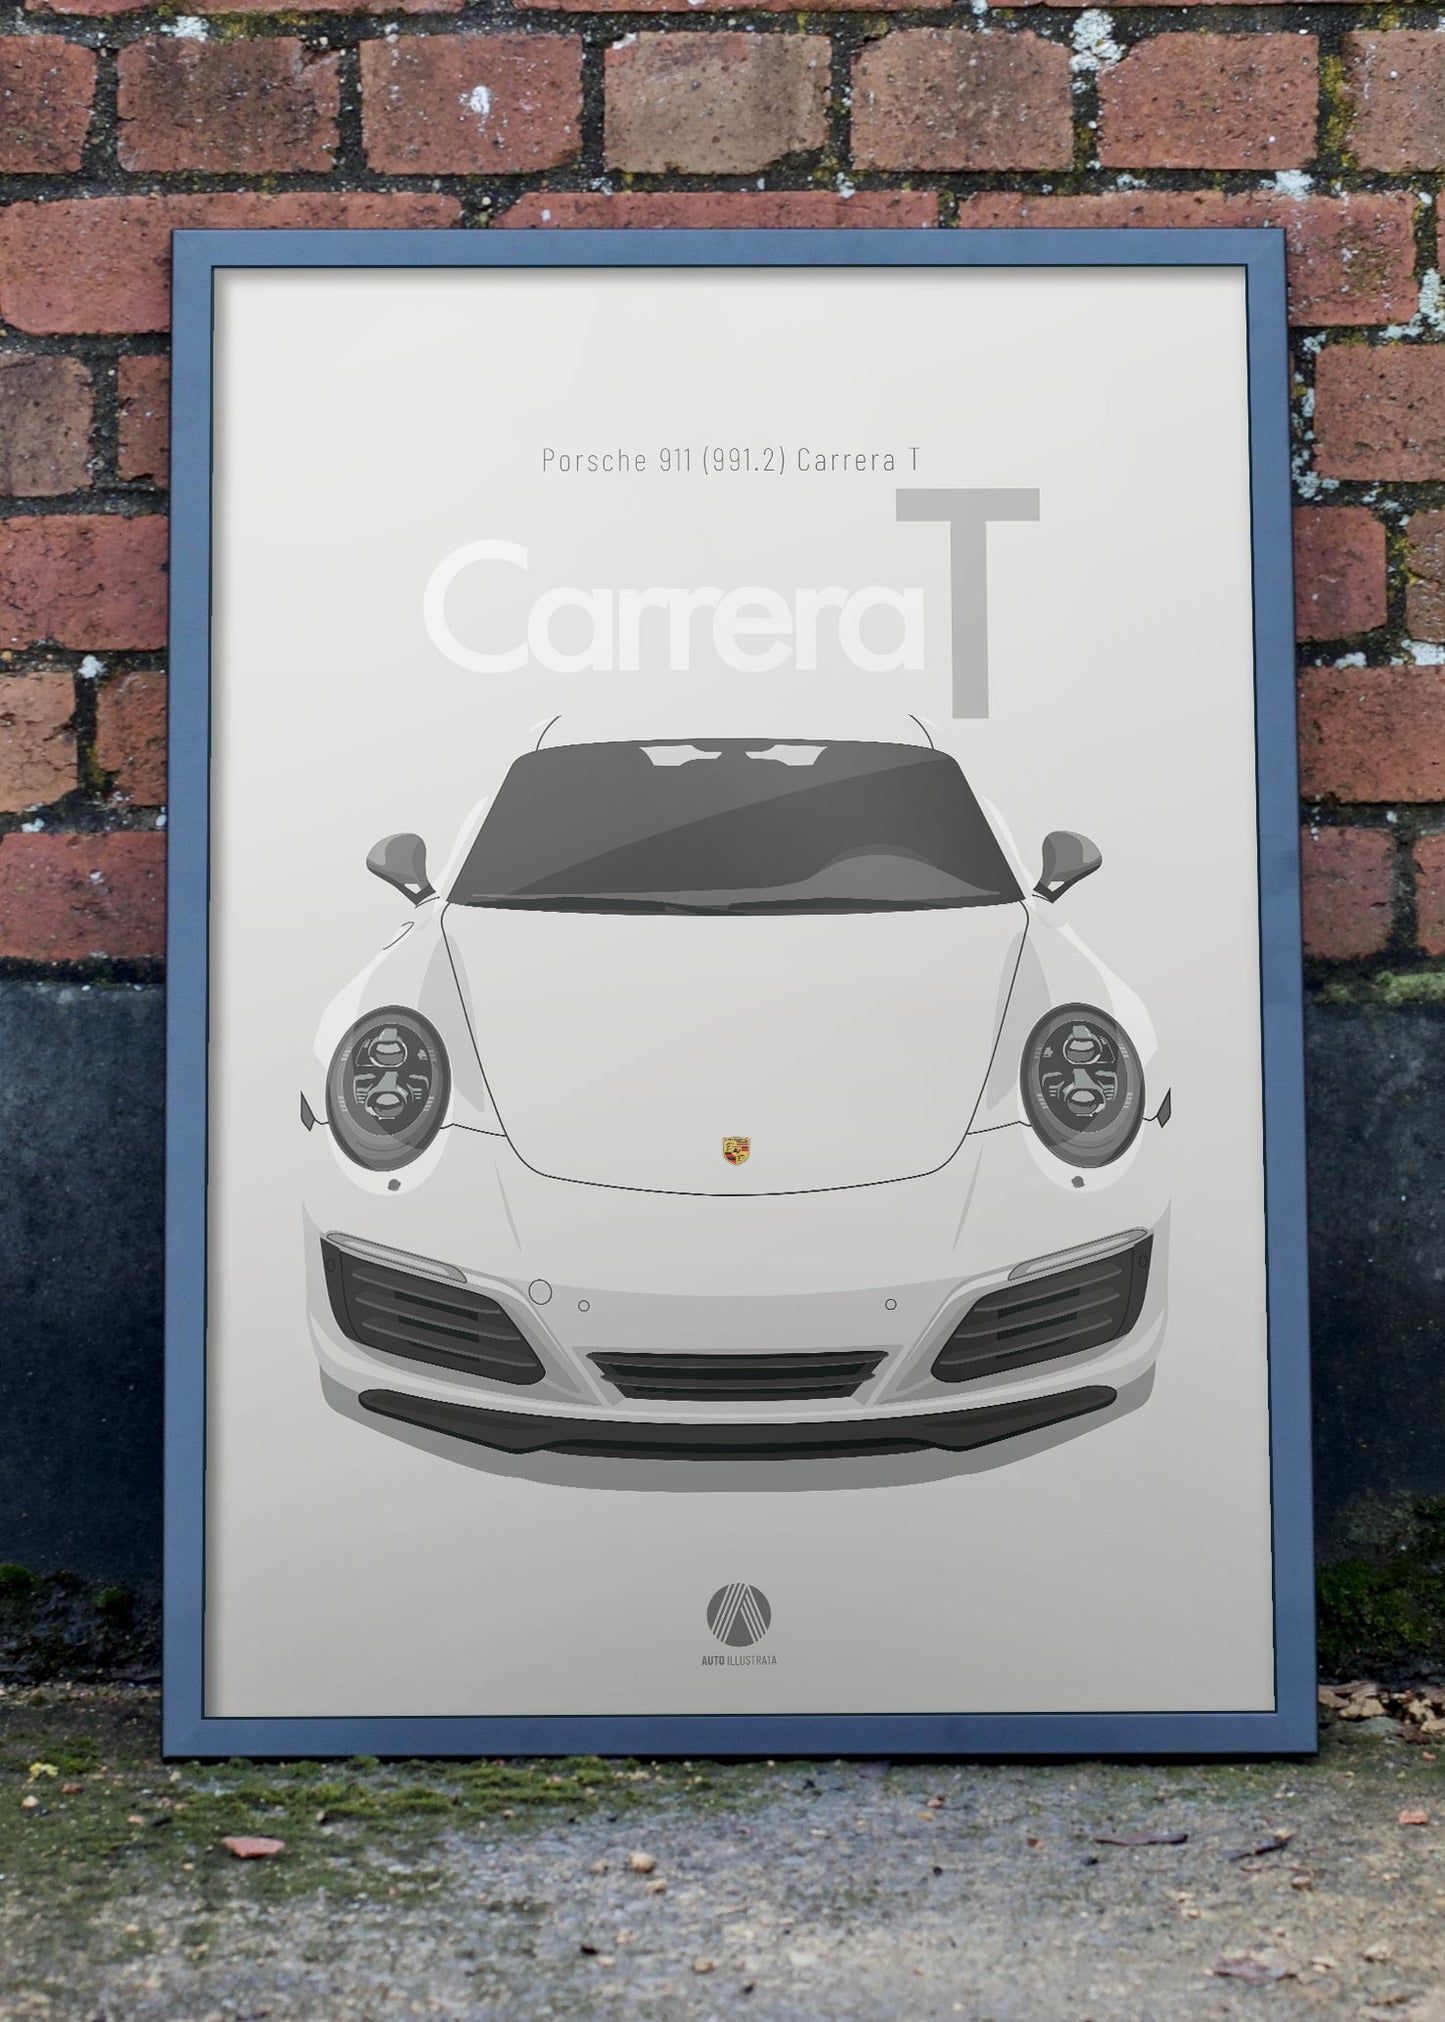 2017 Porsche 911 (991.2) Carrera T - Carrara White - poster print